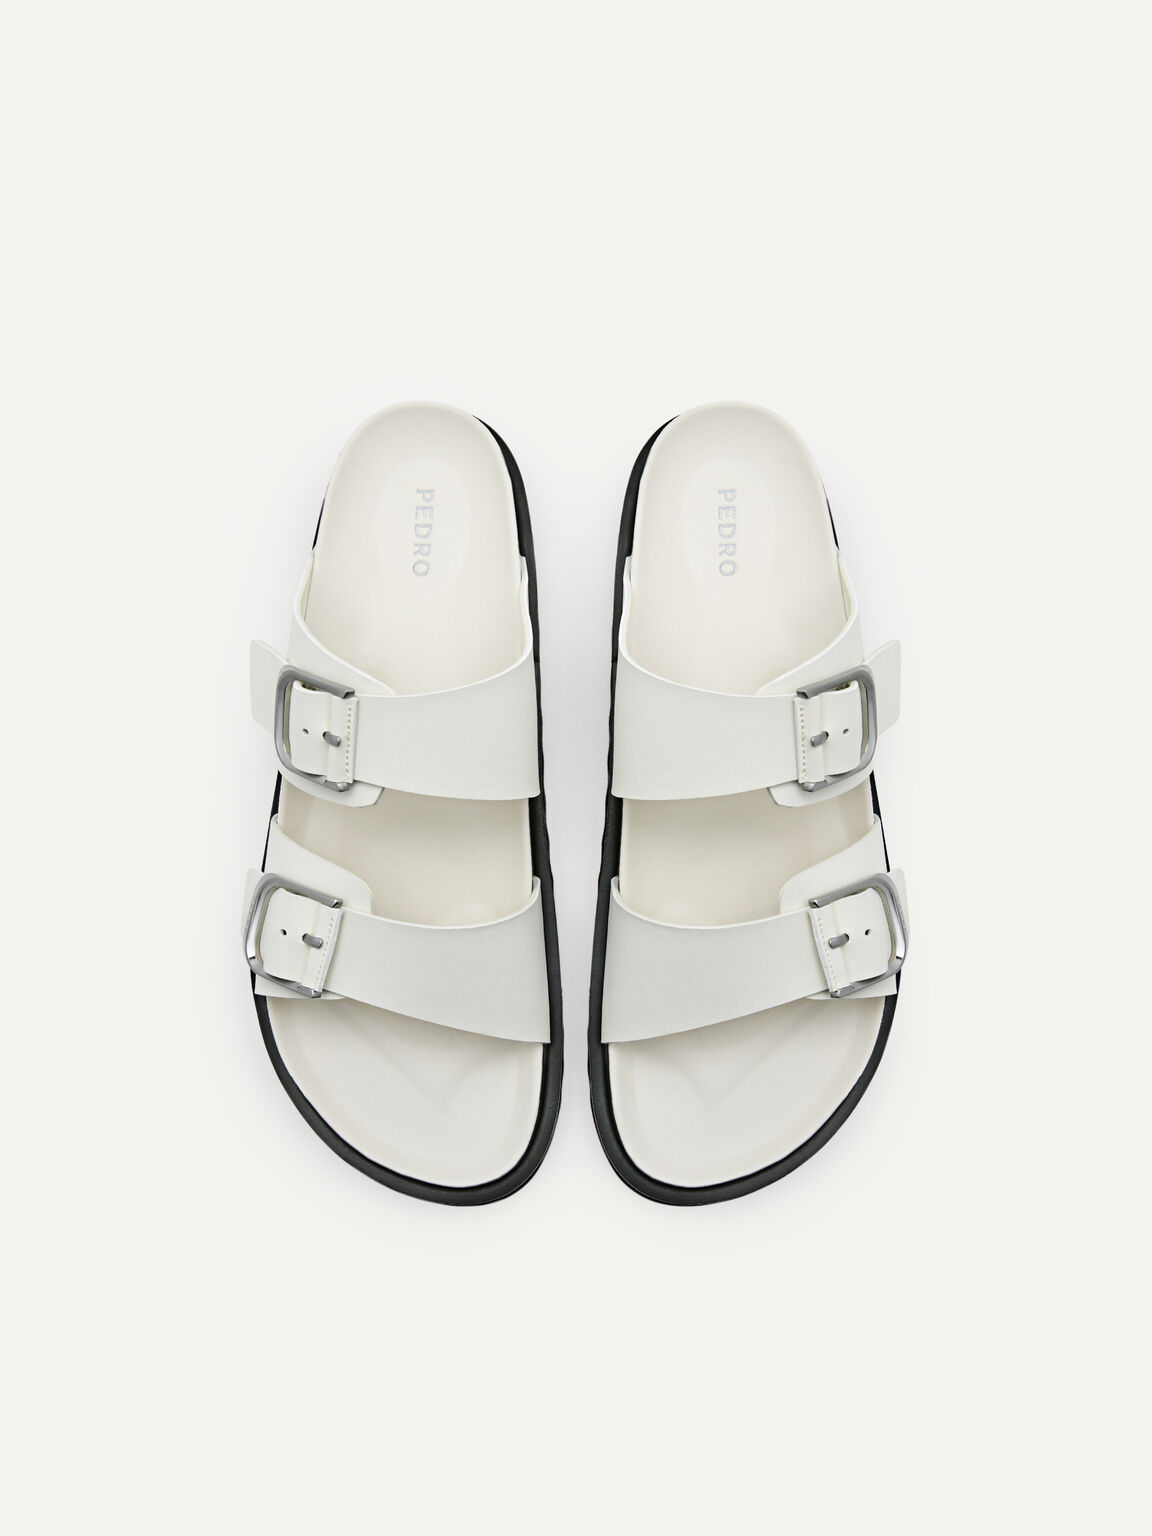 Helix Slide Sandals, White